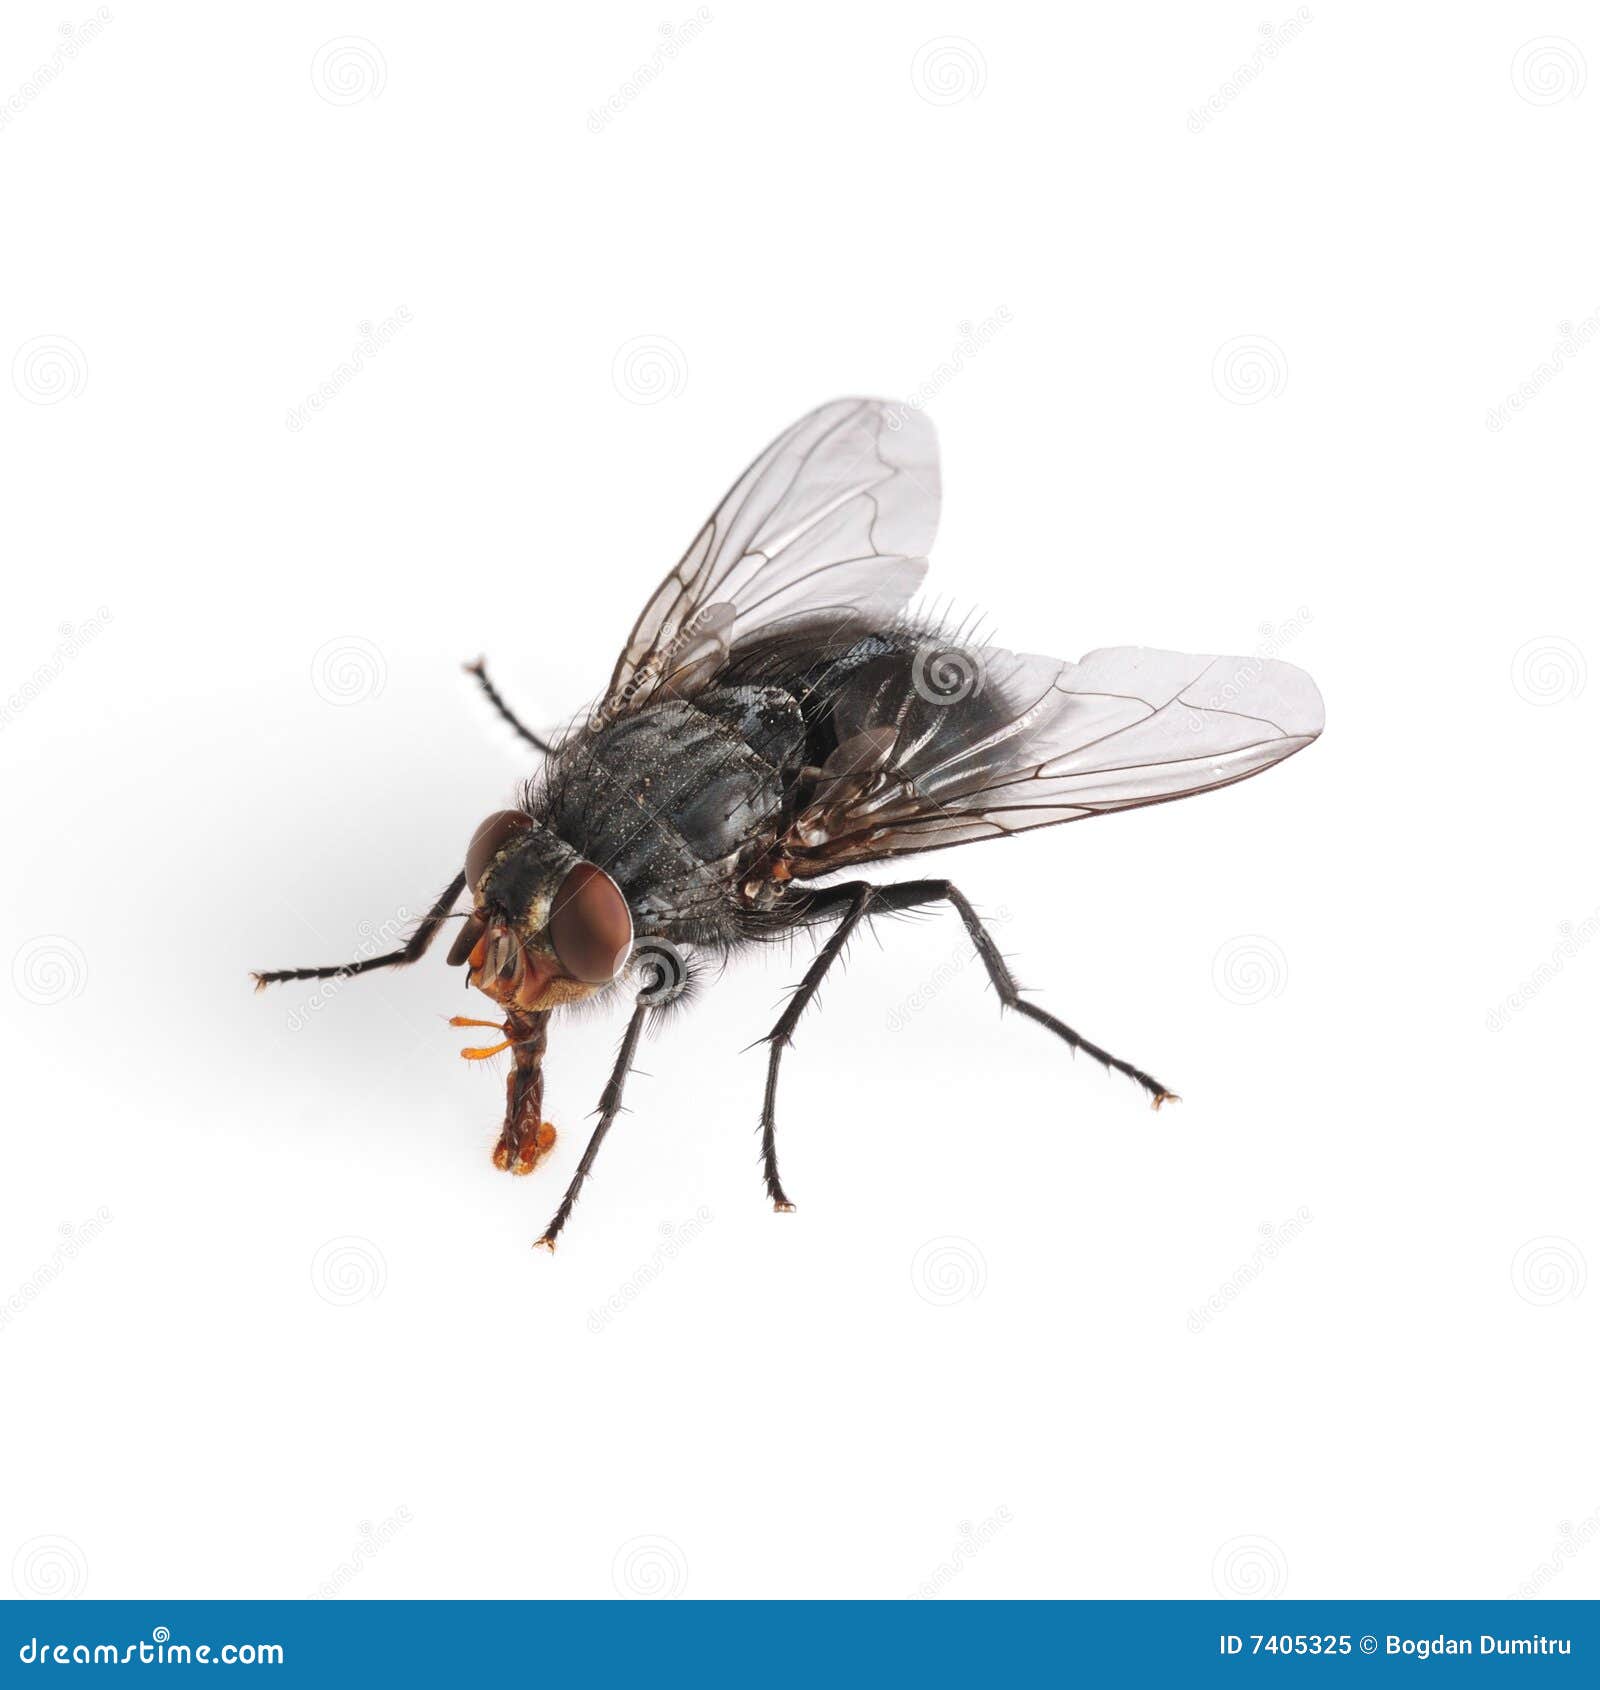 common house fly macro